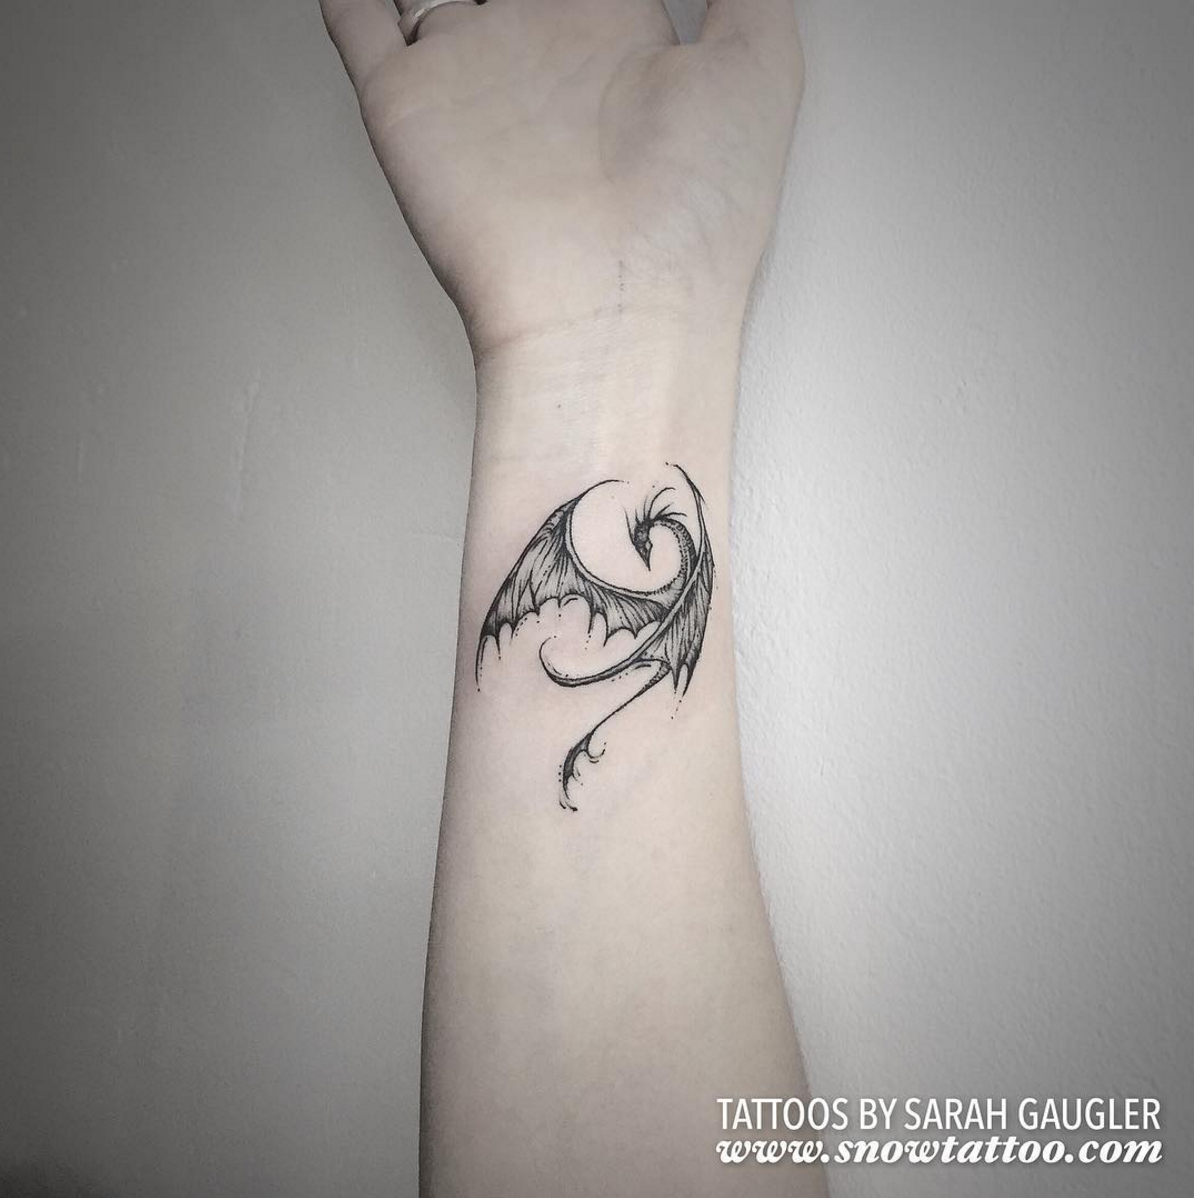 Sarah Gaugler Snow Tattoo Custom Dragon Original Design New York Best Tattoos Best Tattoo Artist NYC.png